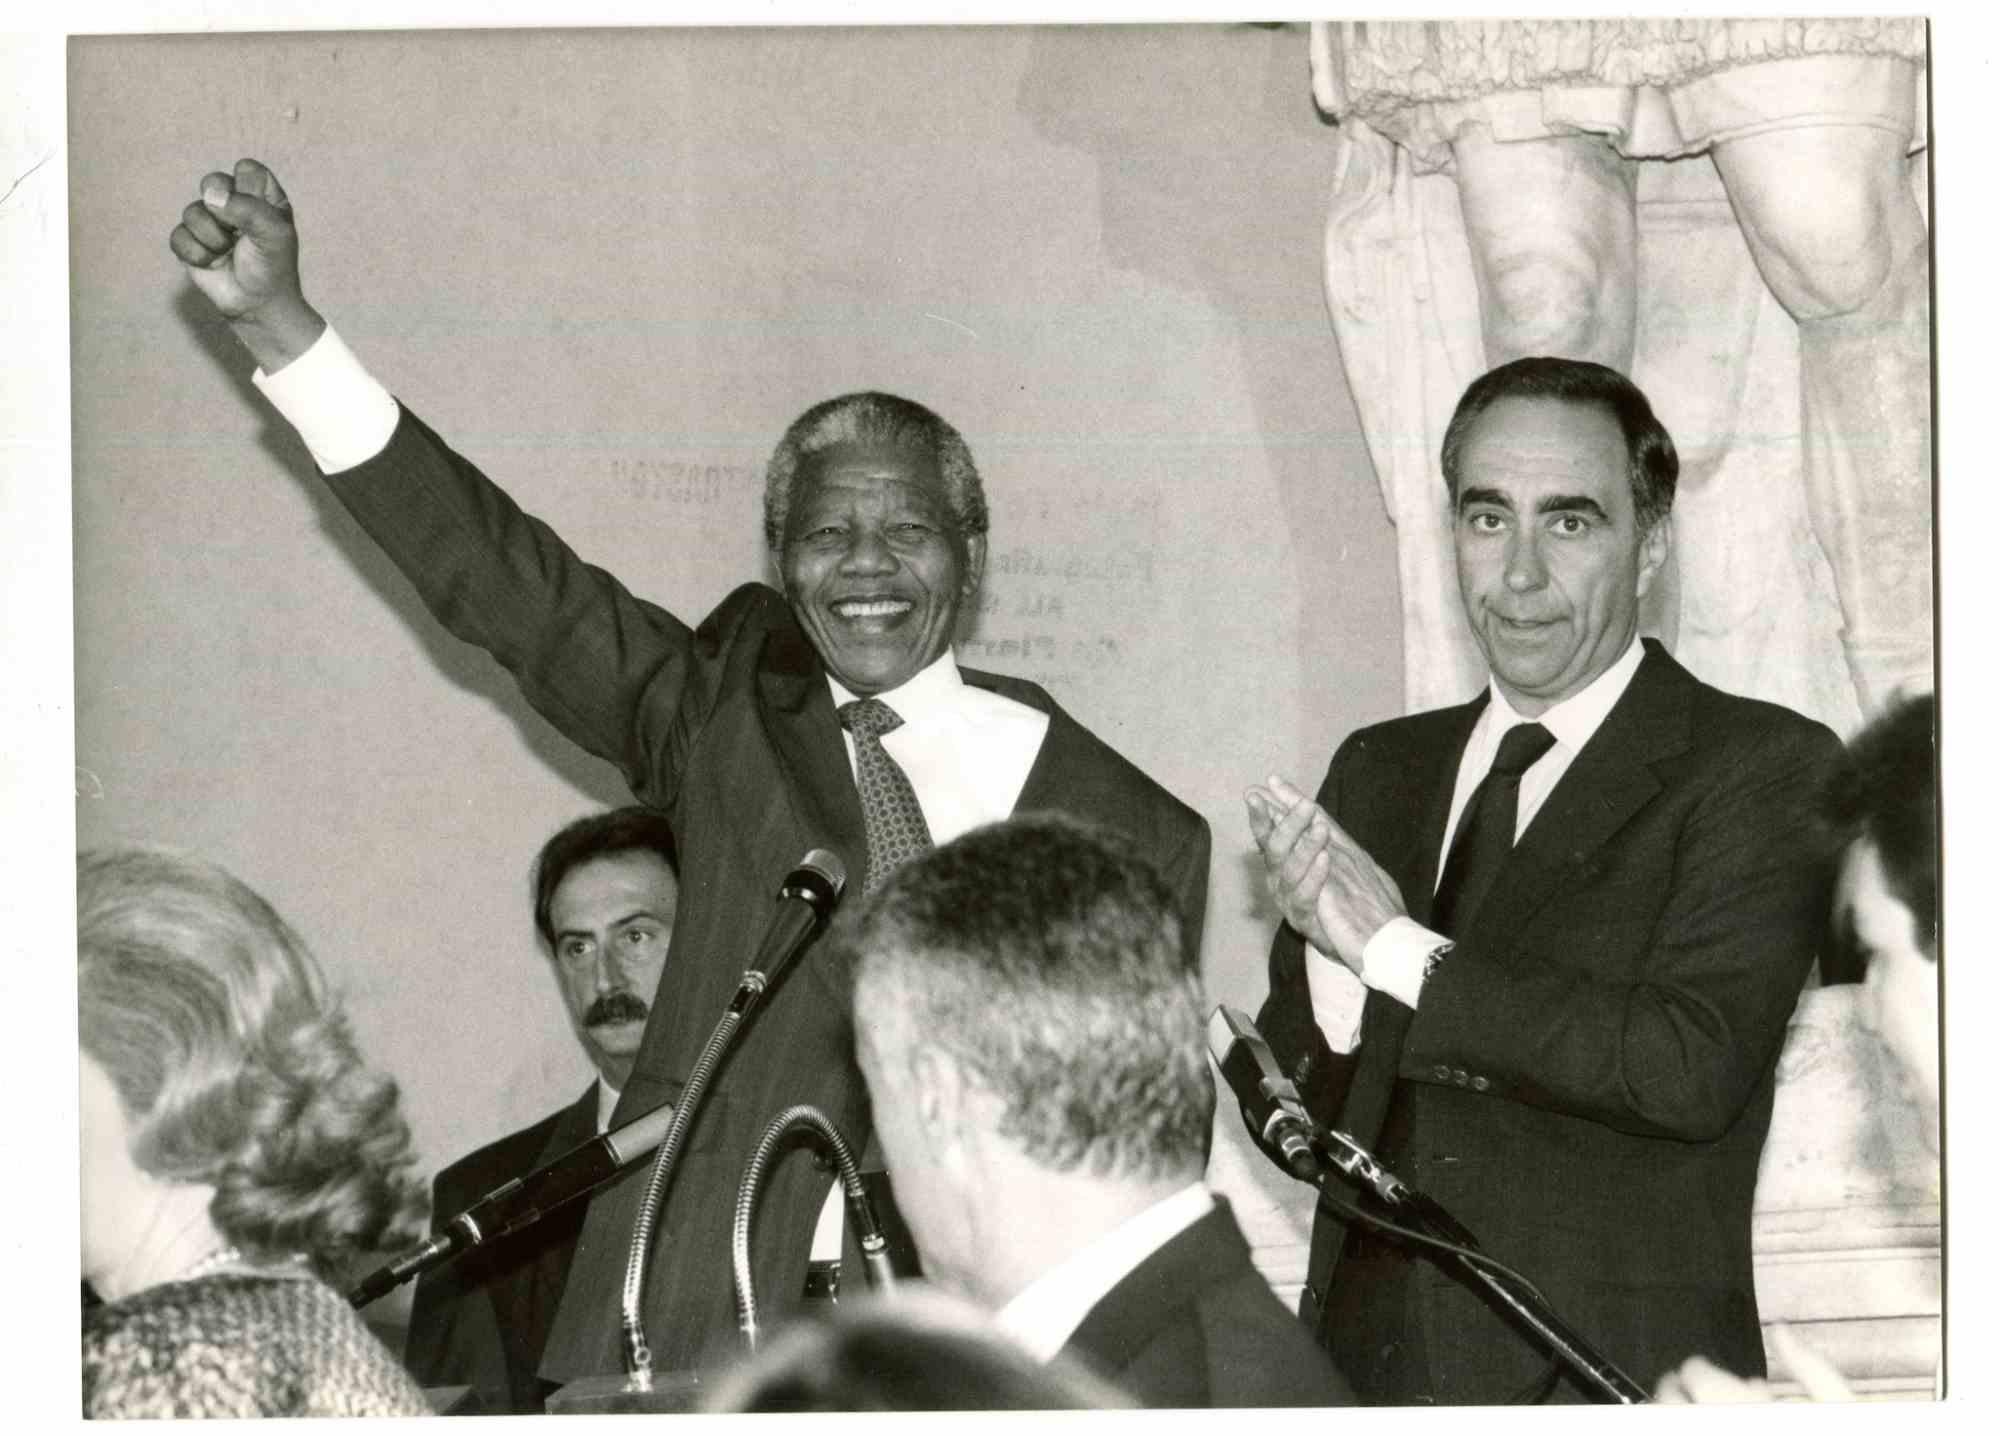 Unknown Figurative Photograph - Nelson Mandela and Franco Carraro - Vintage Photo - 1990